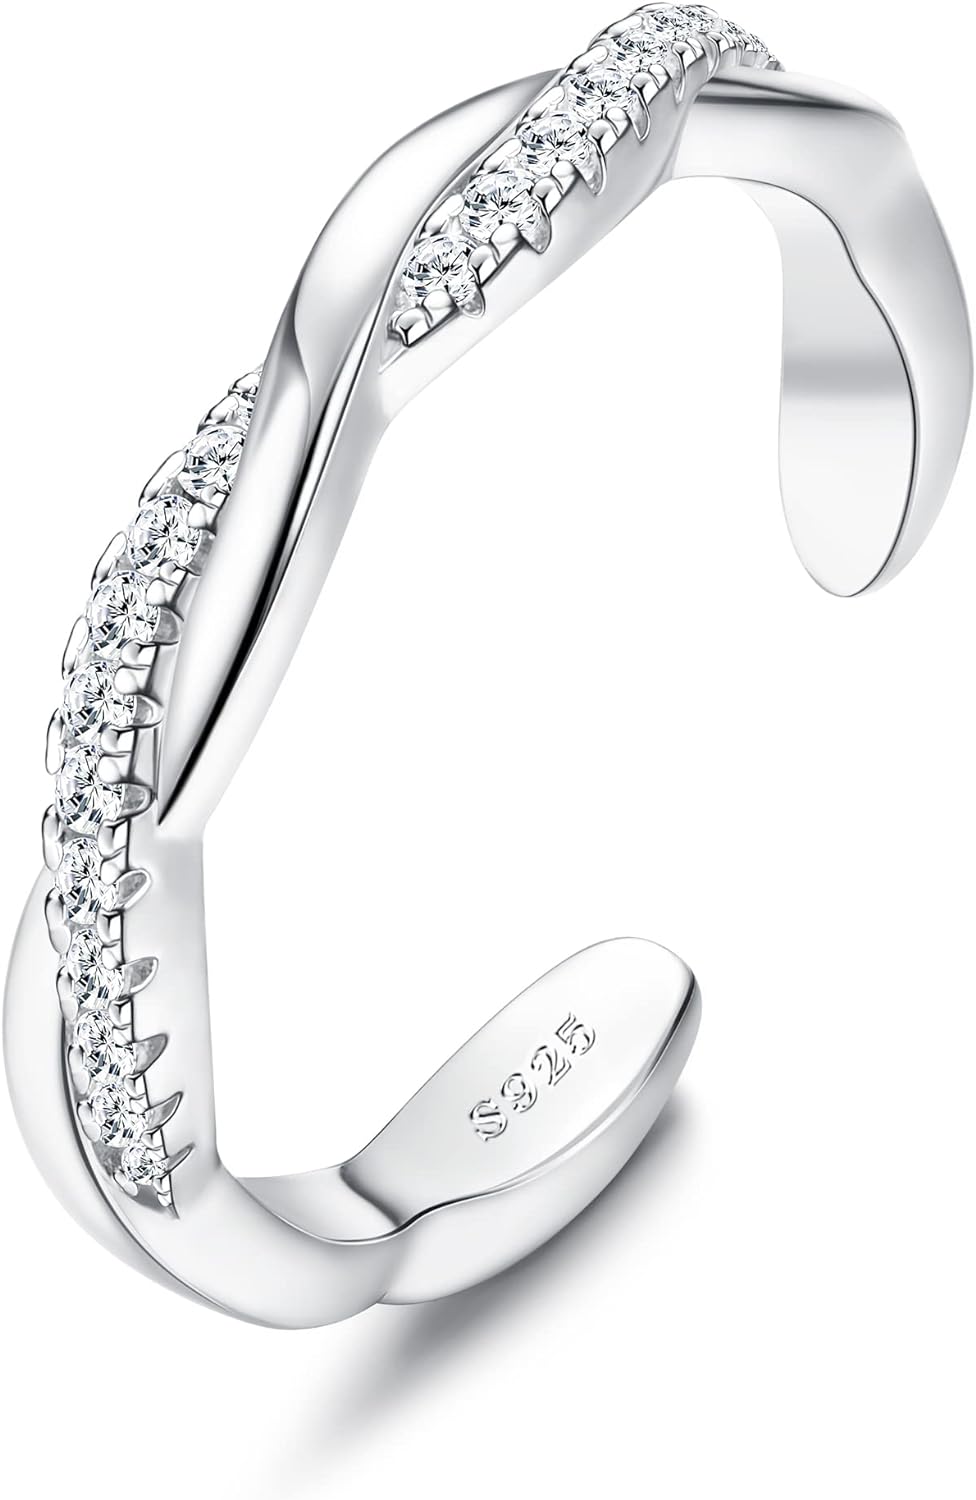 Gemstone Toe Ring Adjustable, 925 Sterling Silver